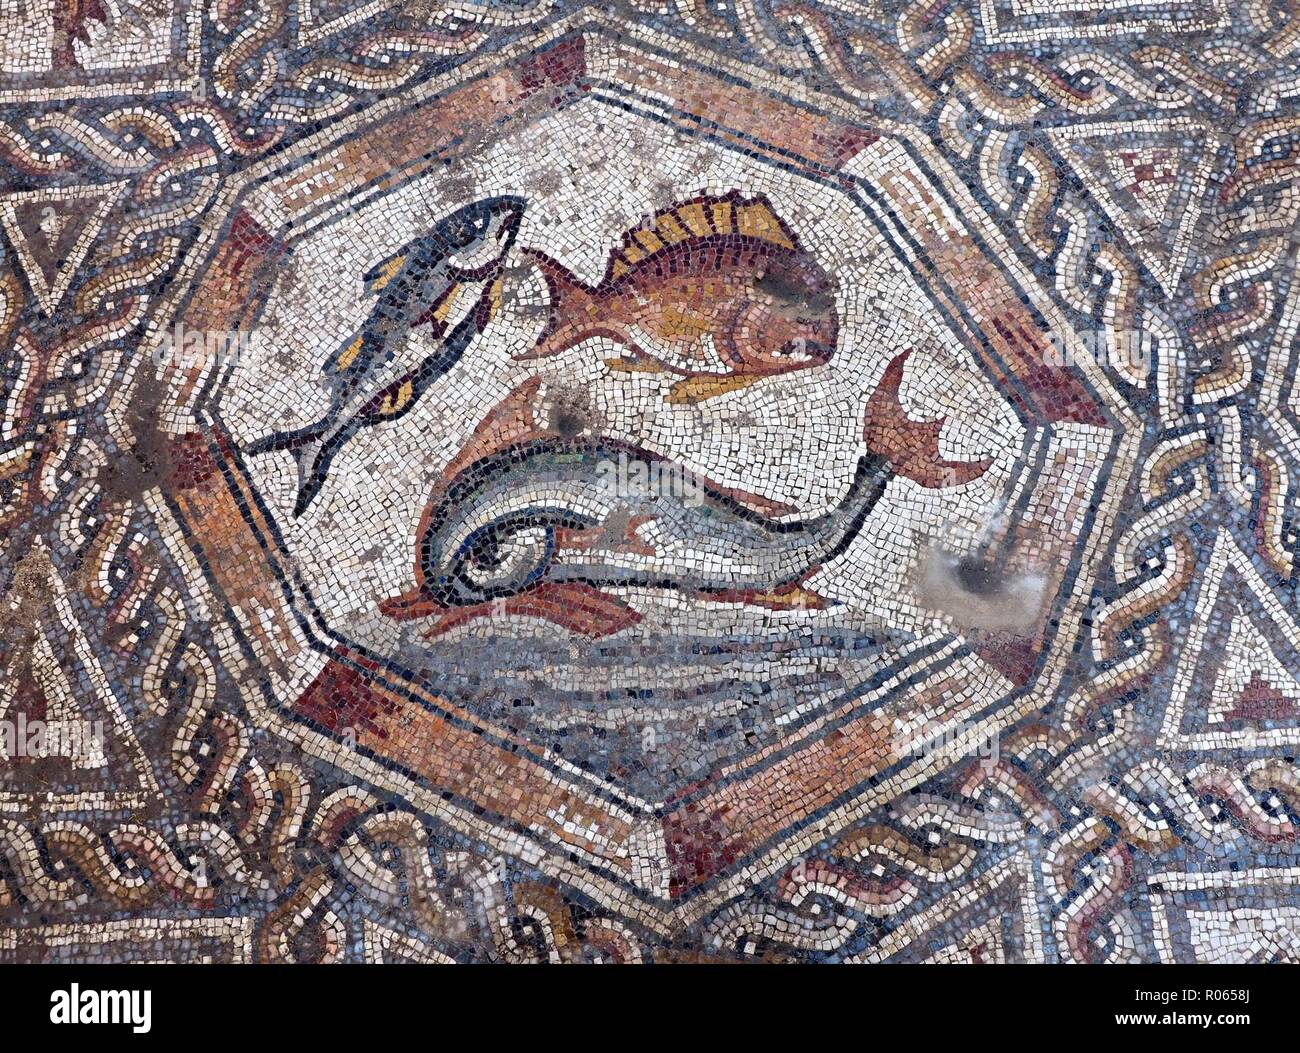 https://c8.alamy.com/comp/R0658J/5792-the-lod-mosaic-a-3-rd-c-roman-mosaic-from-a-roman-villa-excavated-in-the-city-of-lod-near-tel-aviv-detail-shows-varrious-fish-R0658J.jpg